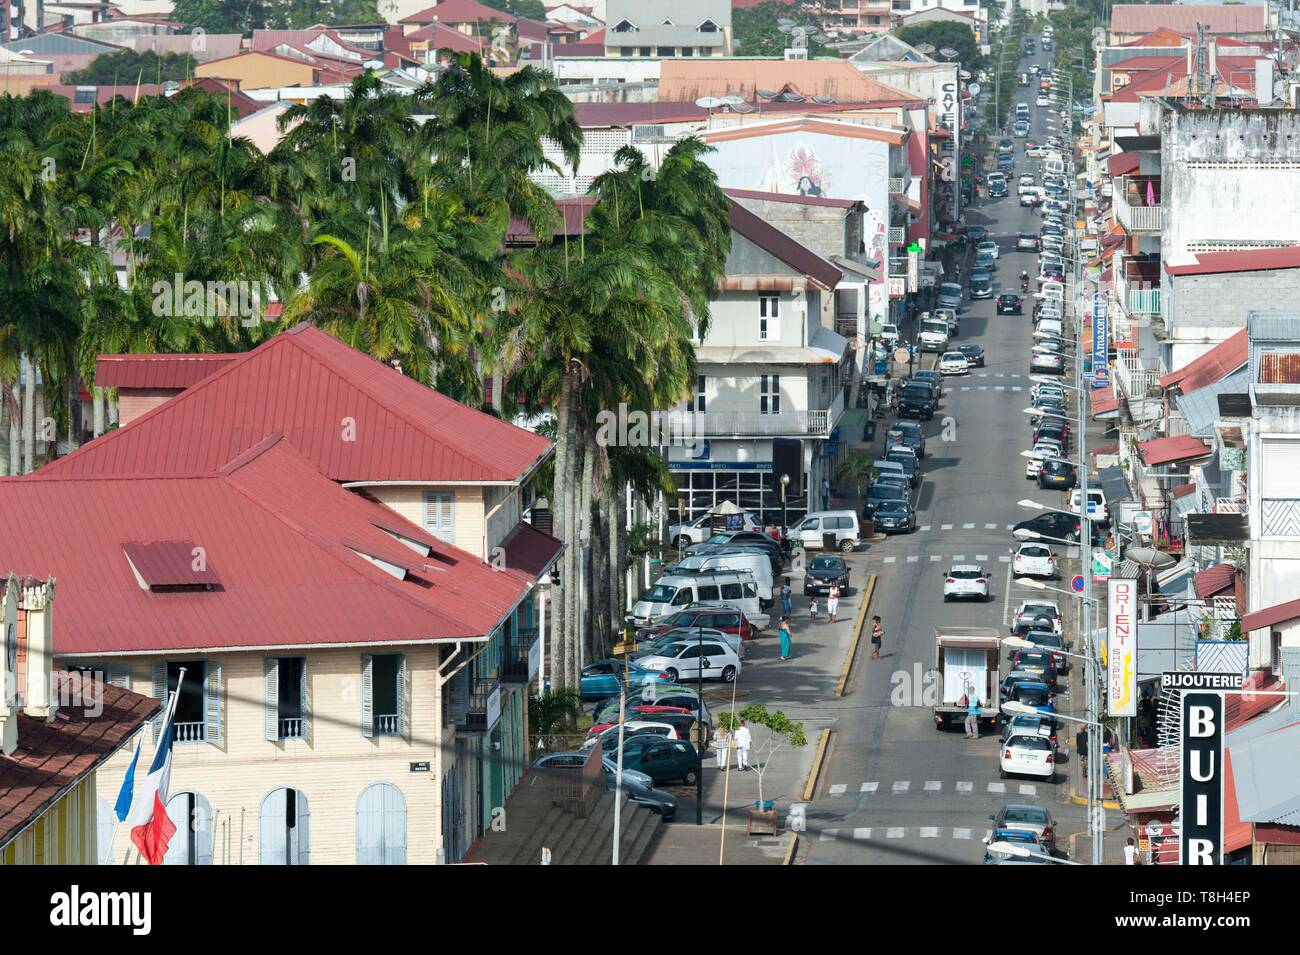 France, French Guiana, Cayenne, Rue de Remire Stock Photo